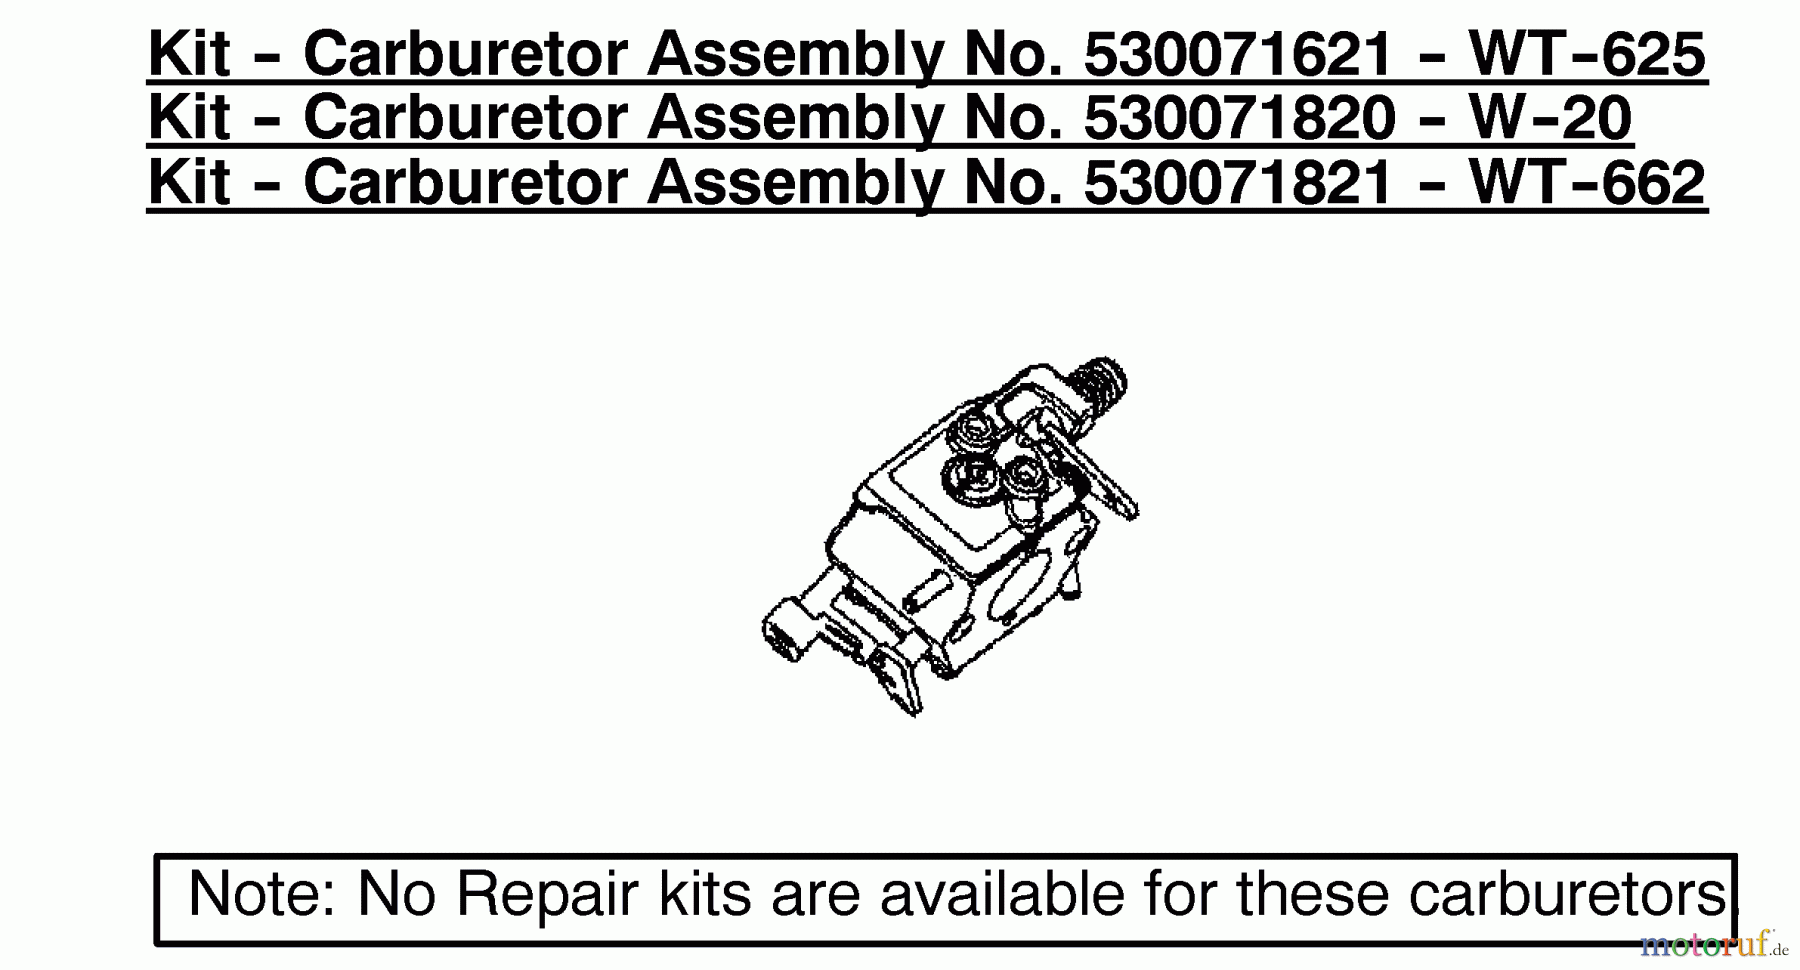  Poulan / Weed Eater Motorsägen 2450 (Type 7) - Poulan Woodmaster Chainsaw Kit - Carburetor Assembly 530071621/530071820/530071821